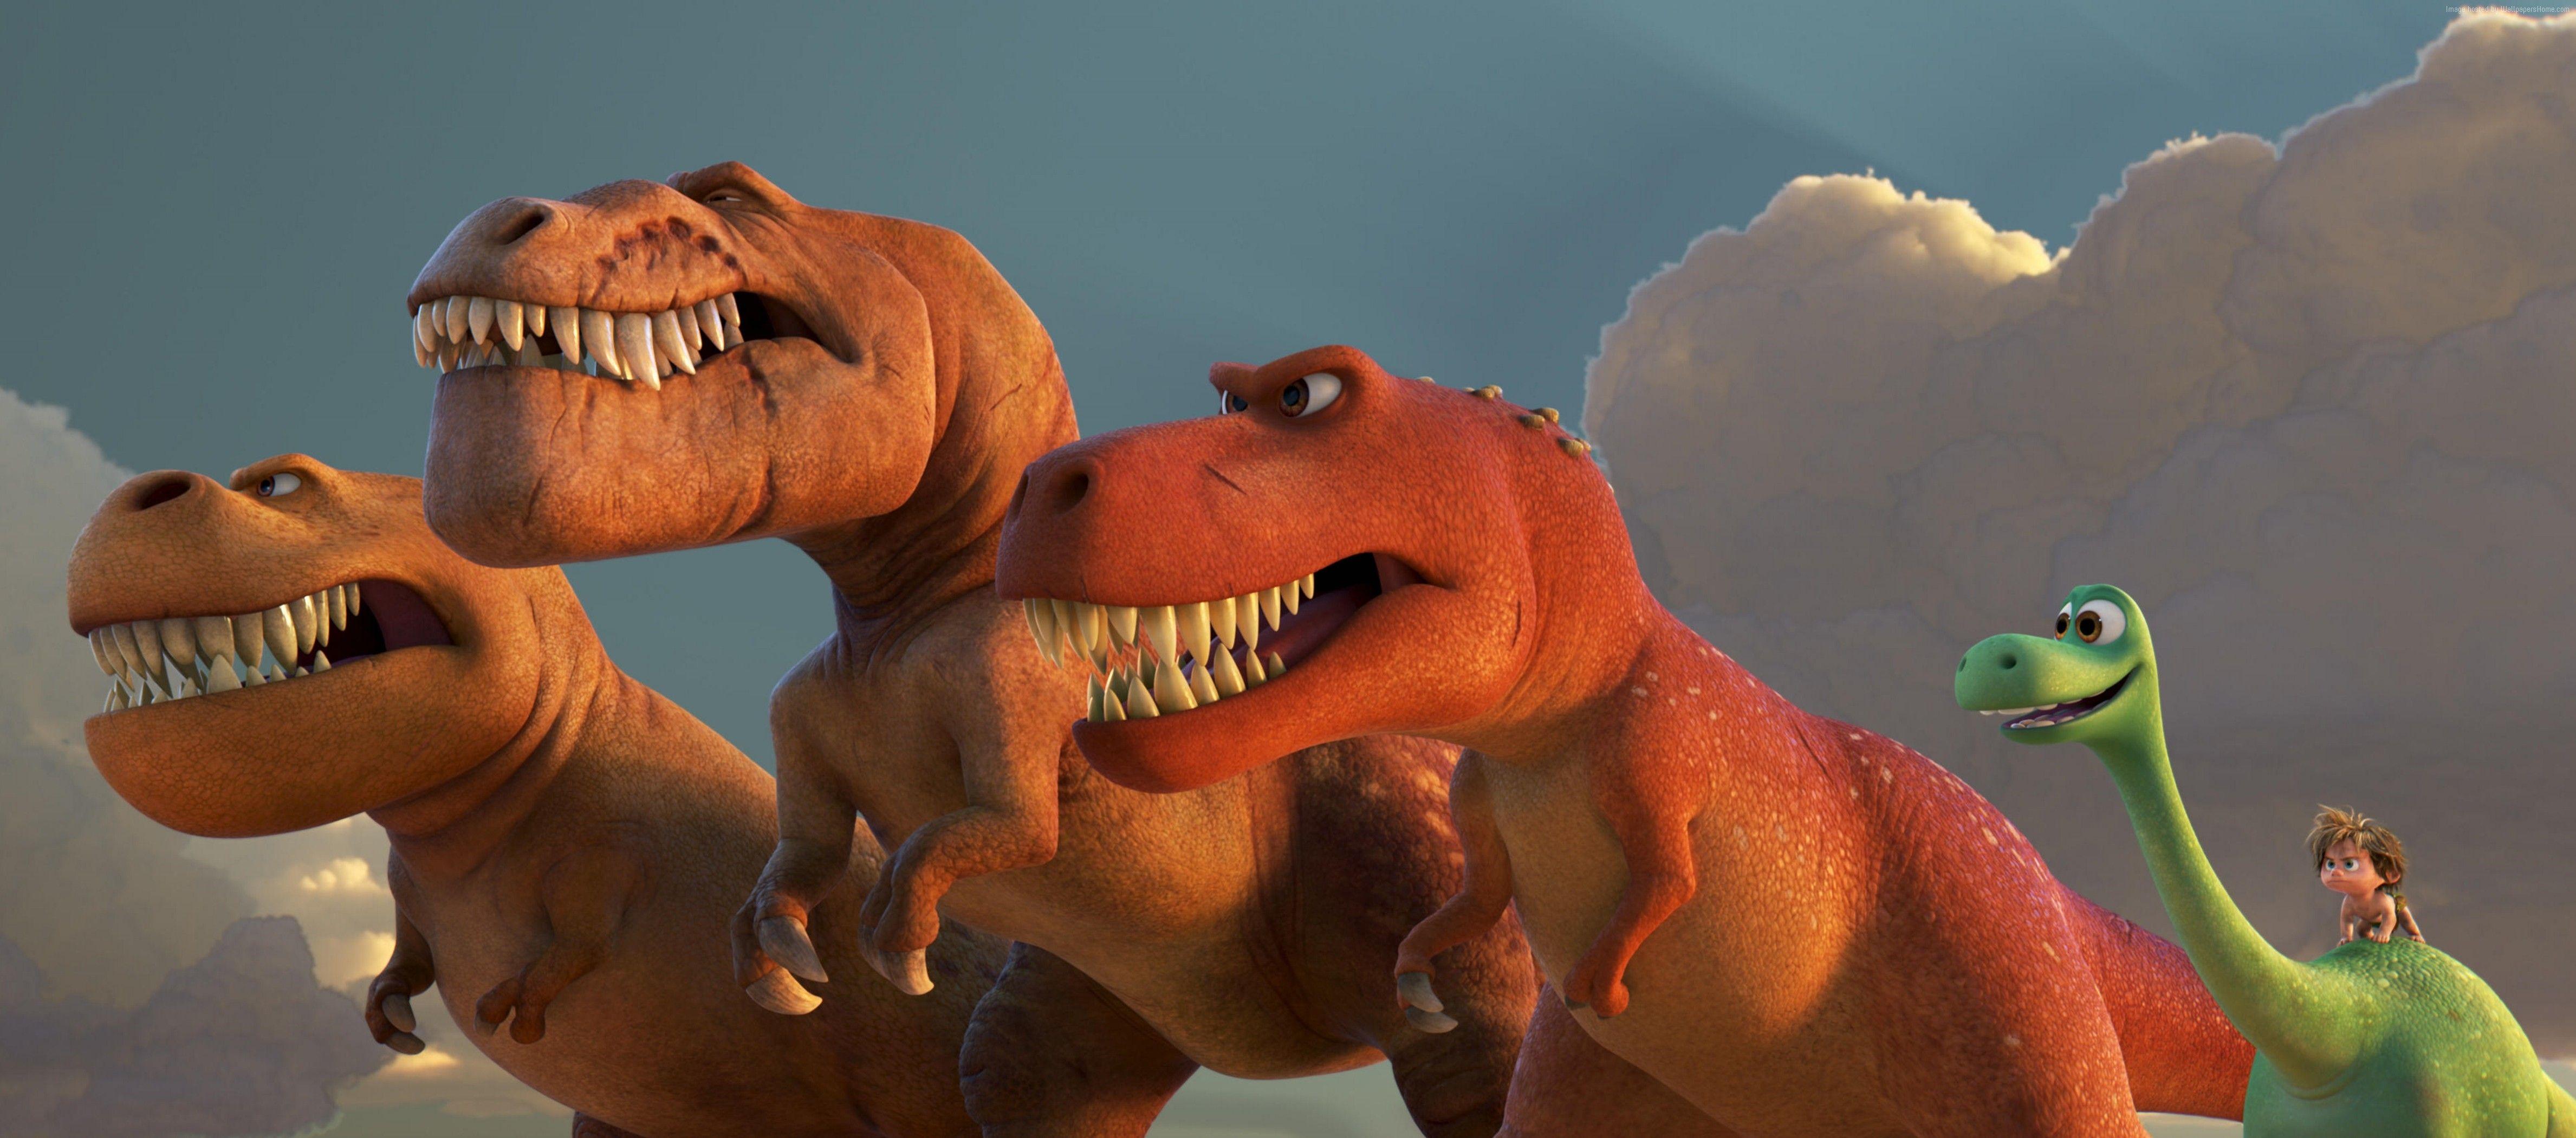 Wallpaper The Good Dinosaur, dinosaurs, Tyrannosaurus, Pixar